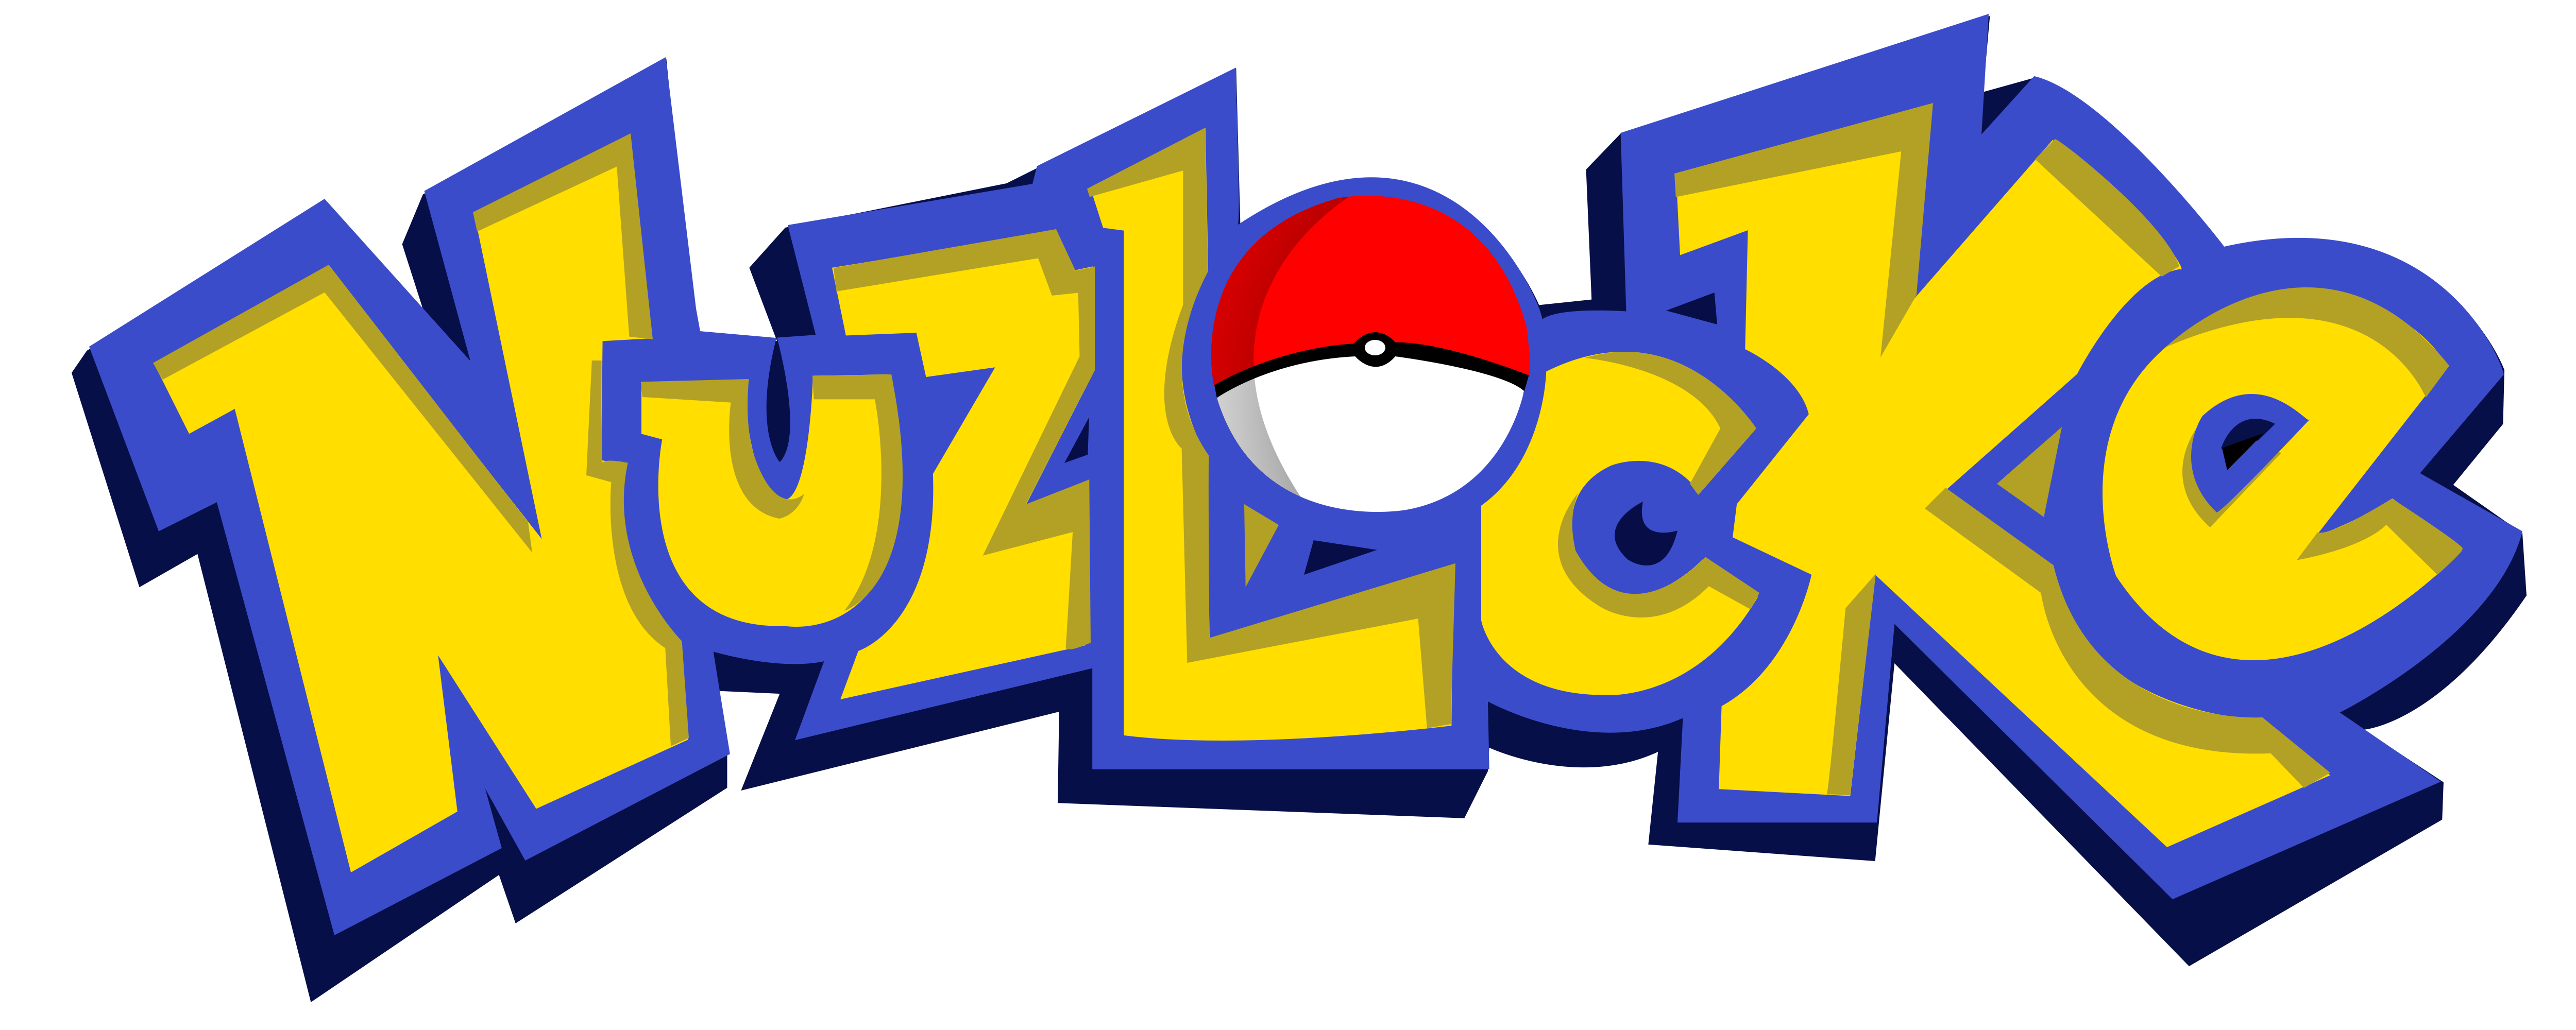 Pokémon Logo transparent PNG - StickPNG